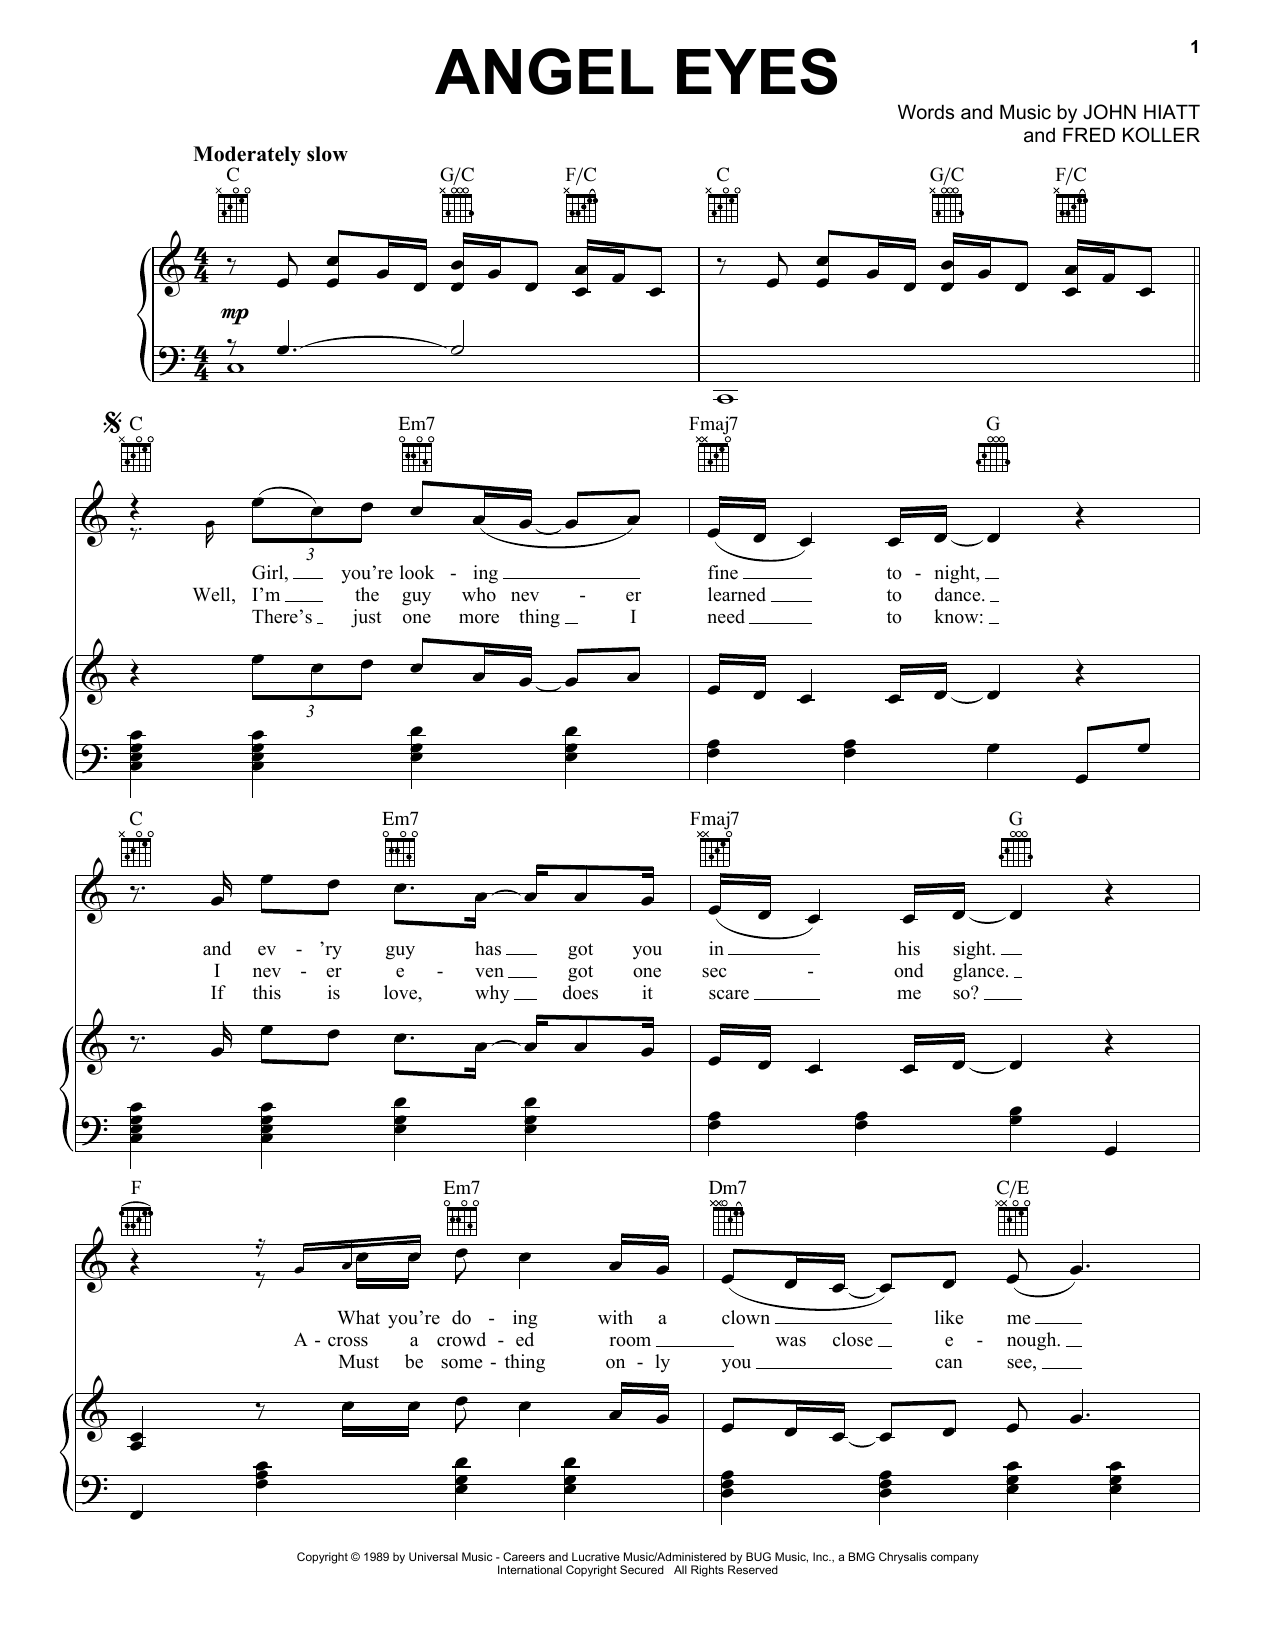 John Hiatt Angel Eyes Sheet Music Notes & Chords for Real Book – Melody, Lyrics & Chords - Download or Print PDF